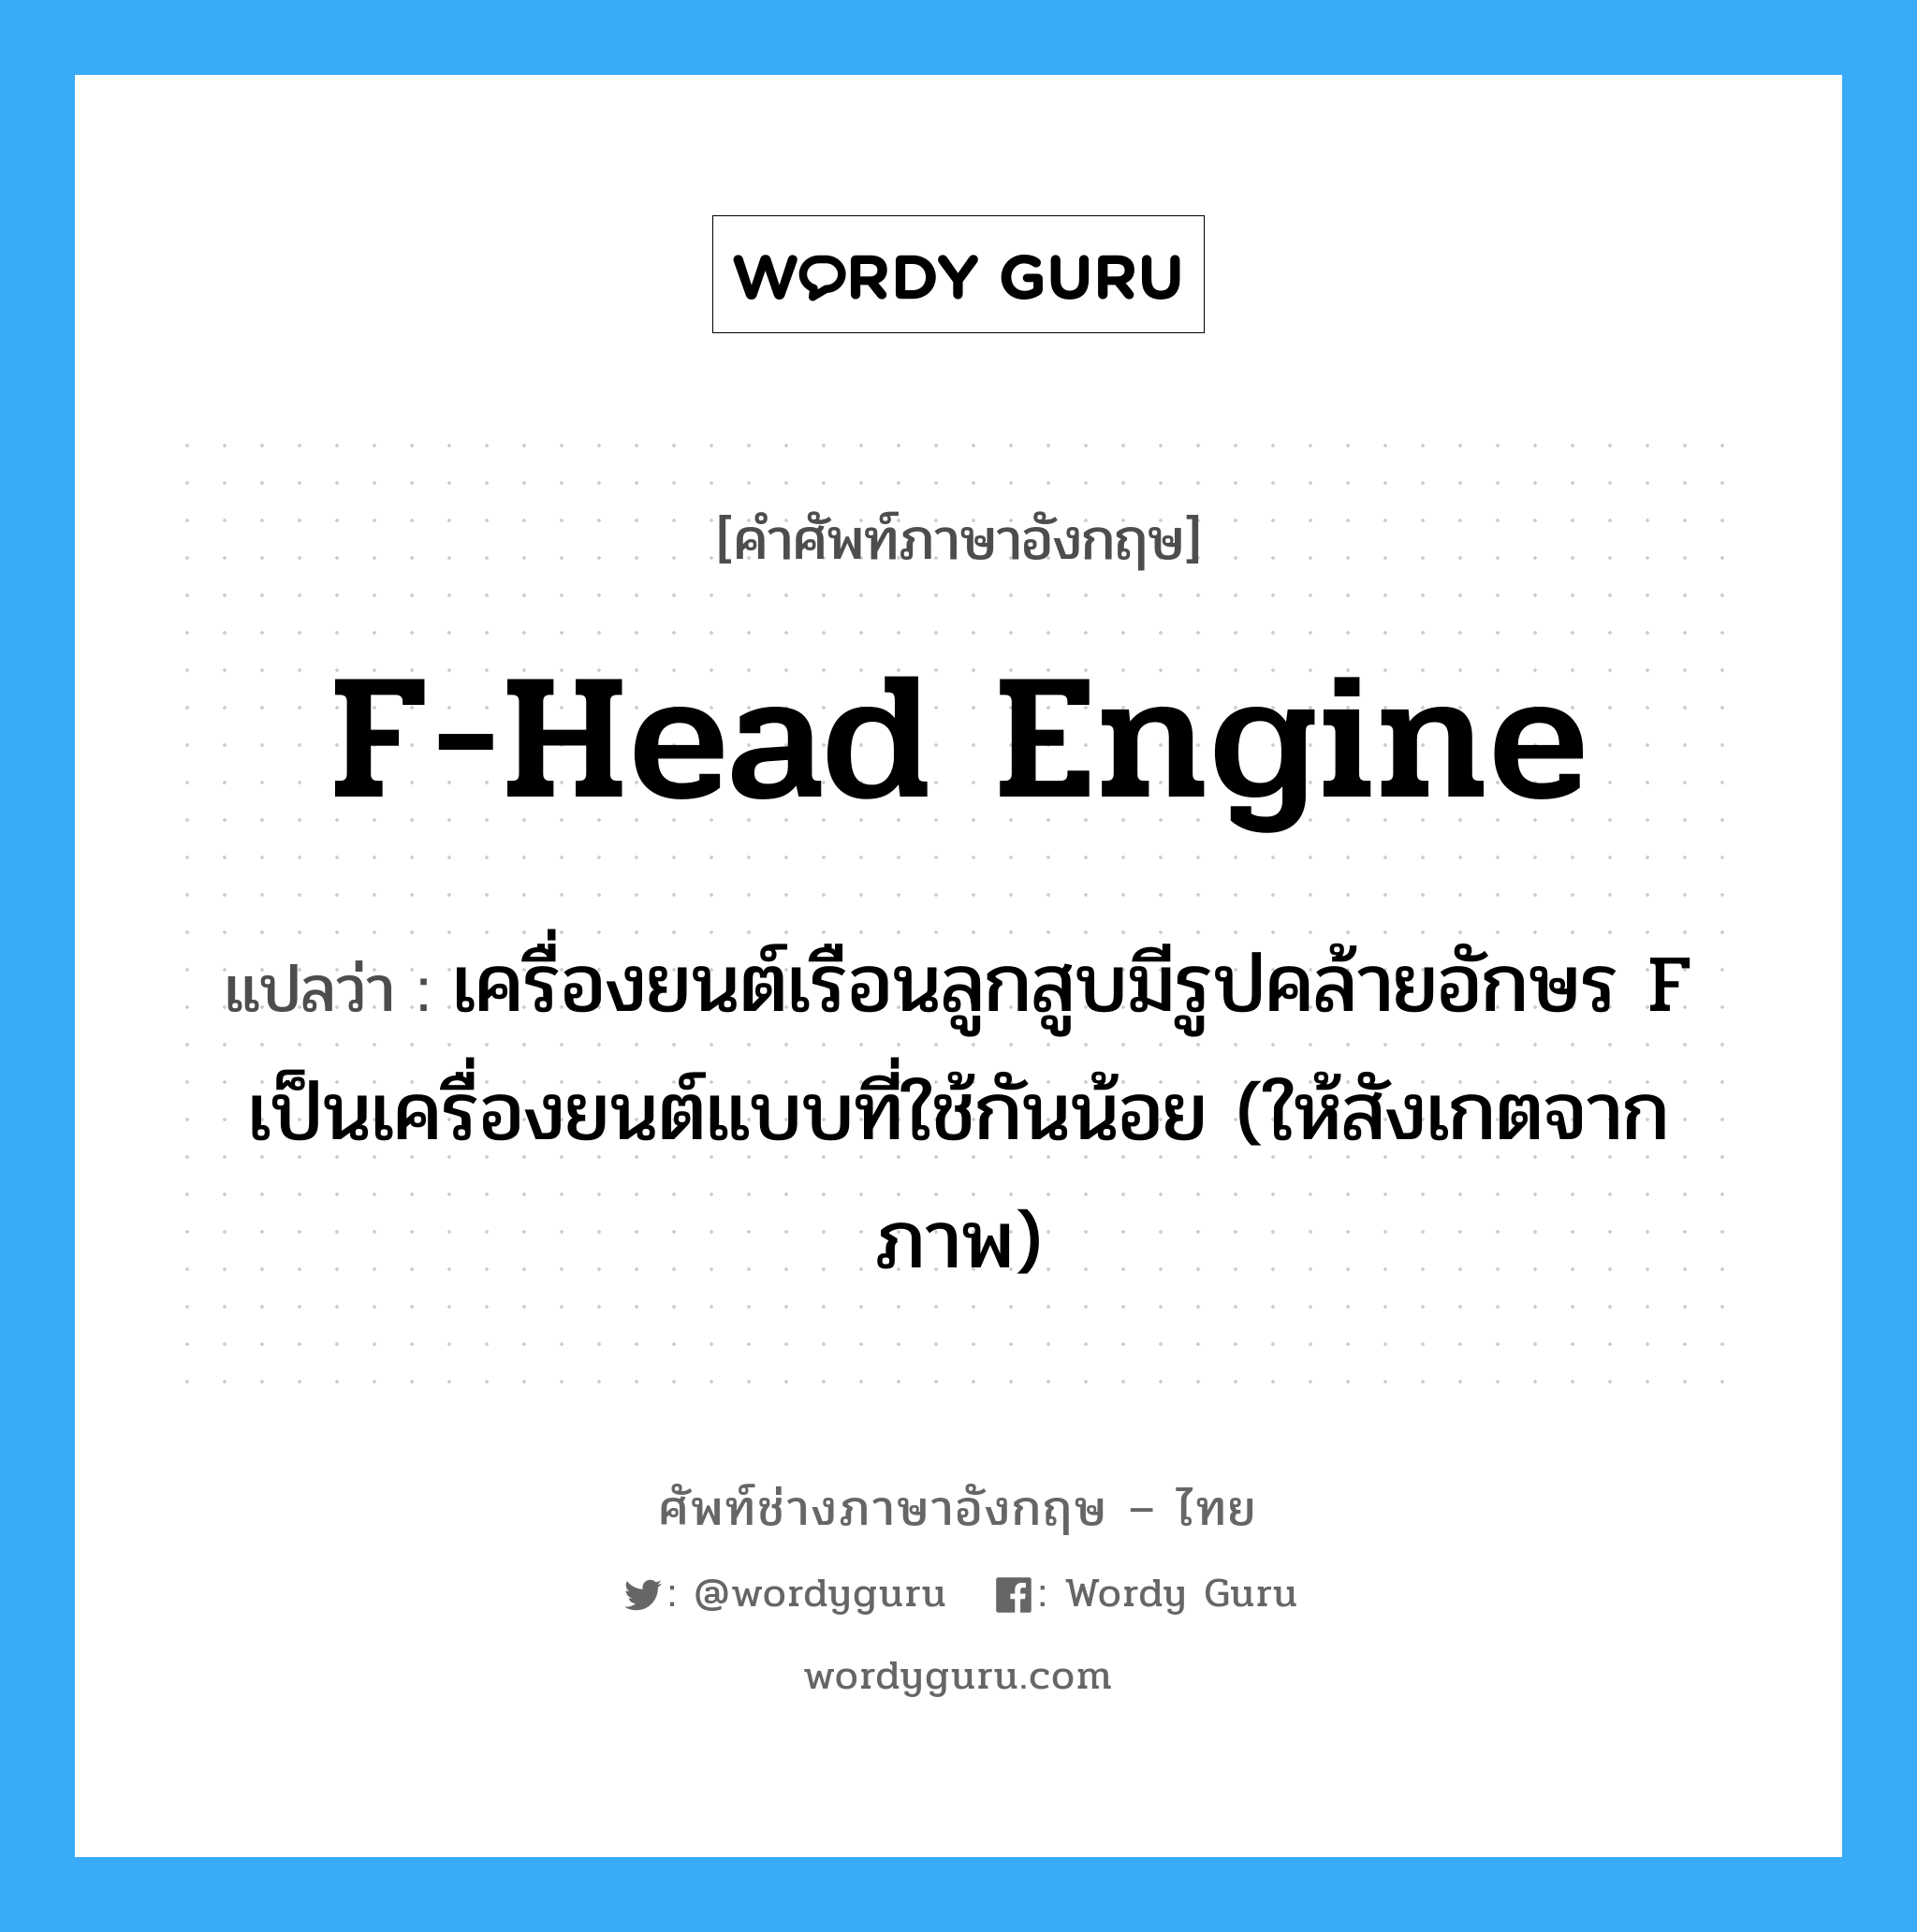 F-head engine แปลว่า?, คำศัพท์ช่างภาษาอังกฤษ - ไทย F-head engine คำศัพท์ภาษาอังกฤษ F-head engine แปลว่า เครื่องยนต์เรือนลูกสูบมีรูปคล้ายอักษร F เป็นเครื่องยนต์แบบที่ใช้กันน้อย (ให้สังเกตจากภาพ)